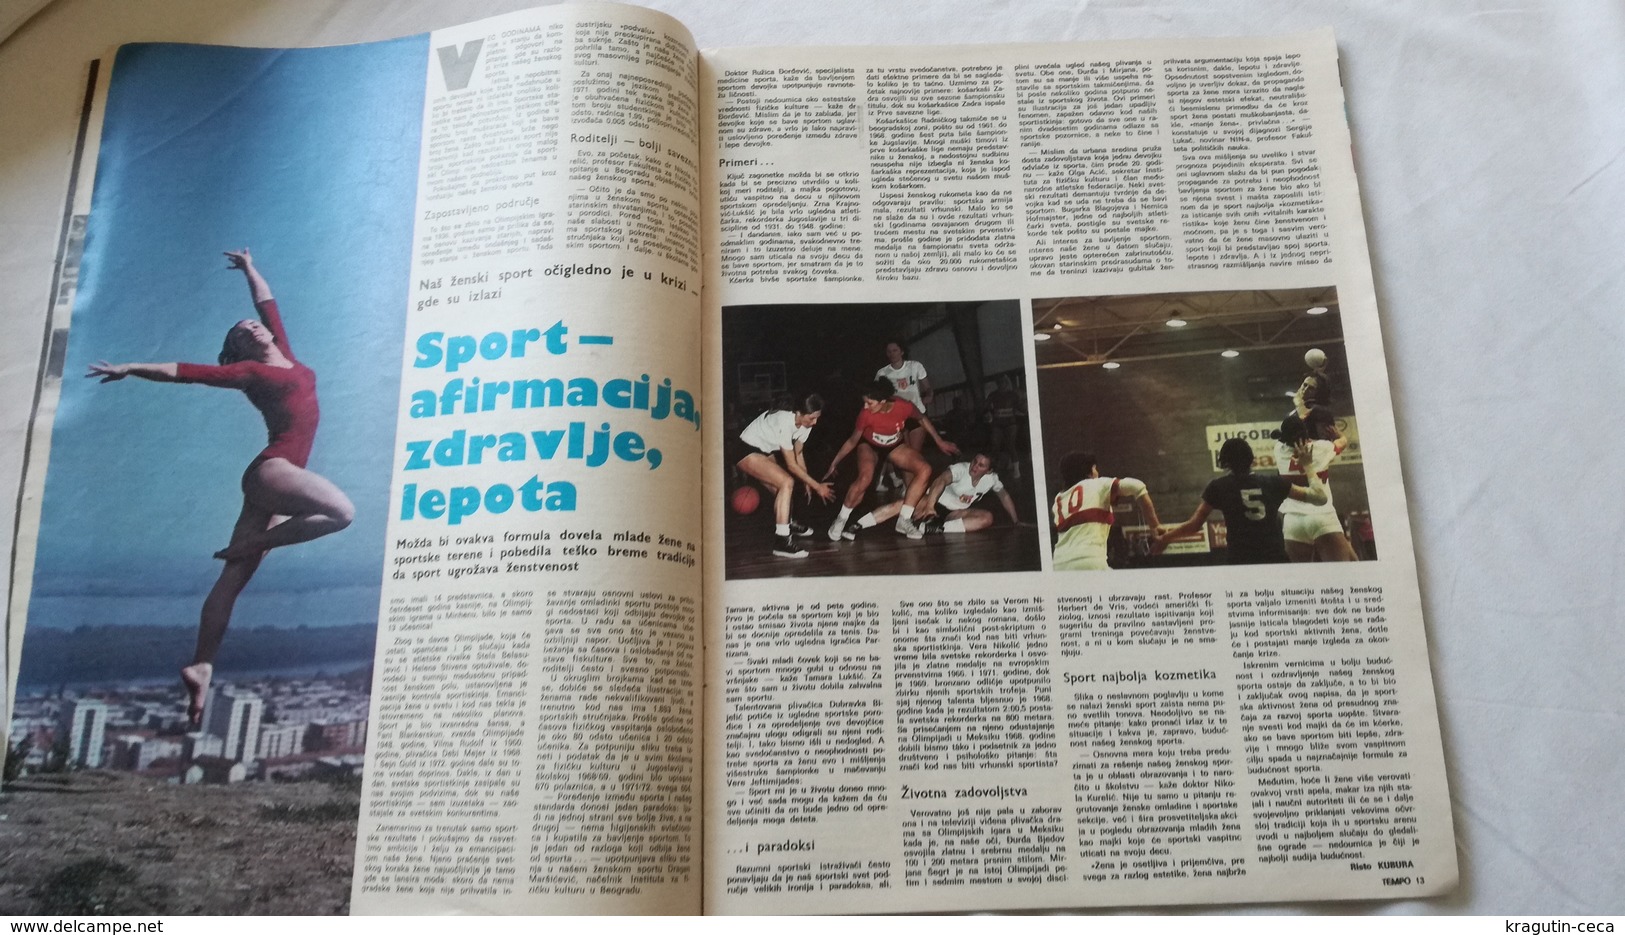 1974 TEMPO YUGOSLAVIA SERBIA SPORT FOOTBALL MAGAZINE NEWSPAPERS HAJDUK MATO GAVRAN CELIK BASKETBALL GYMNASTICS RIJEKA FC